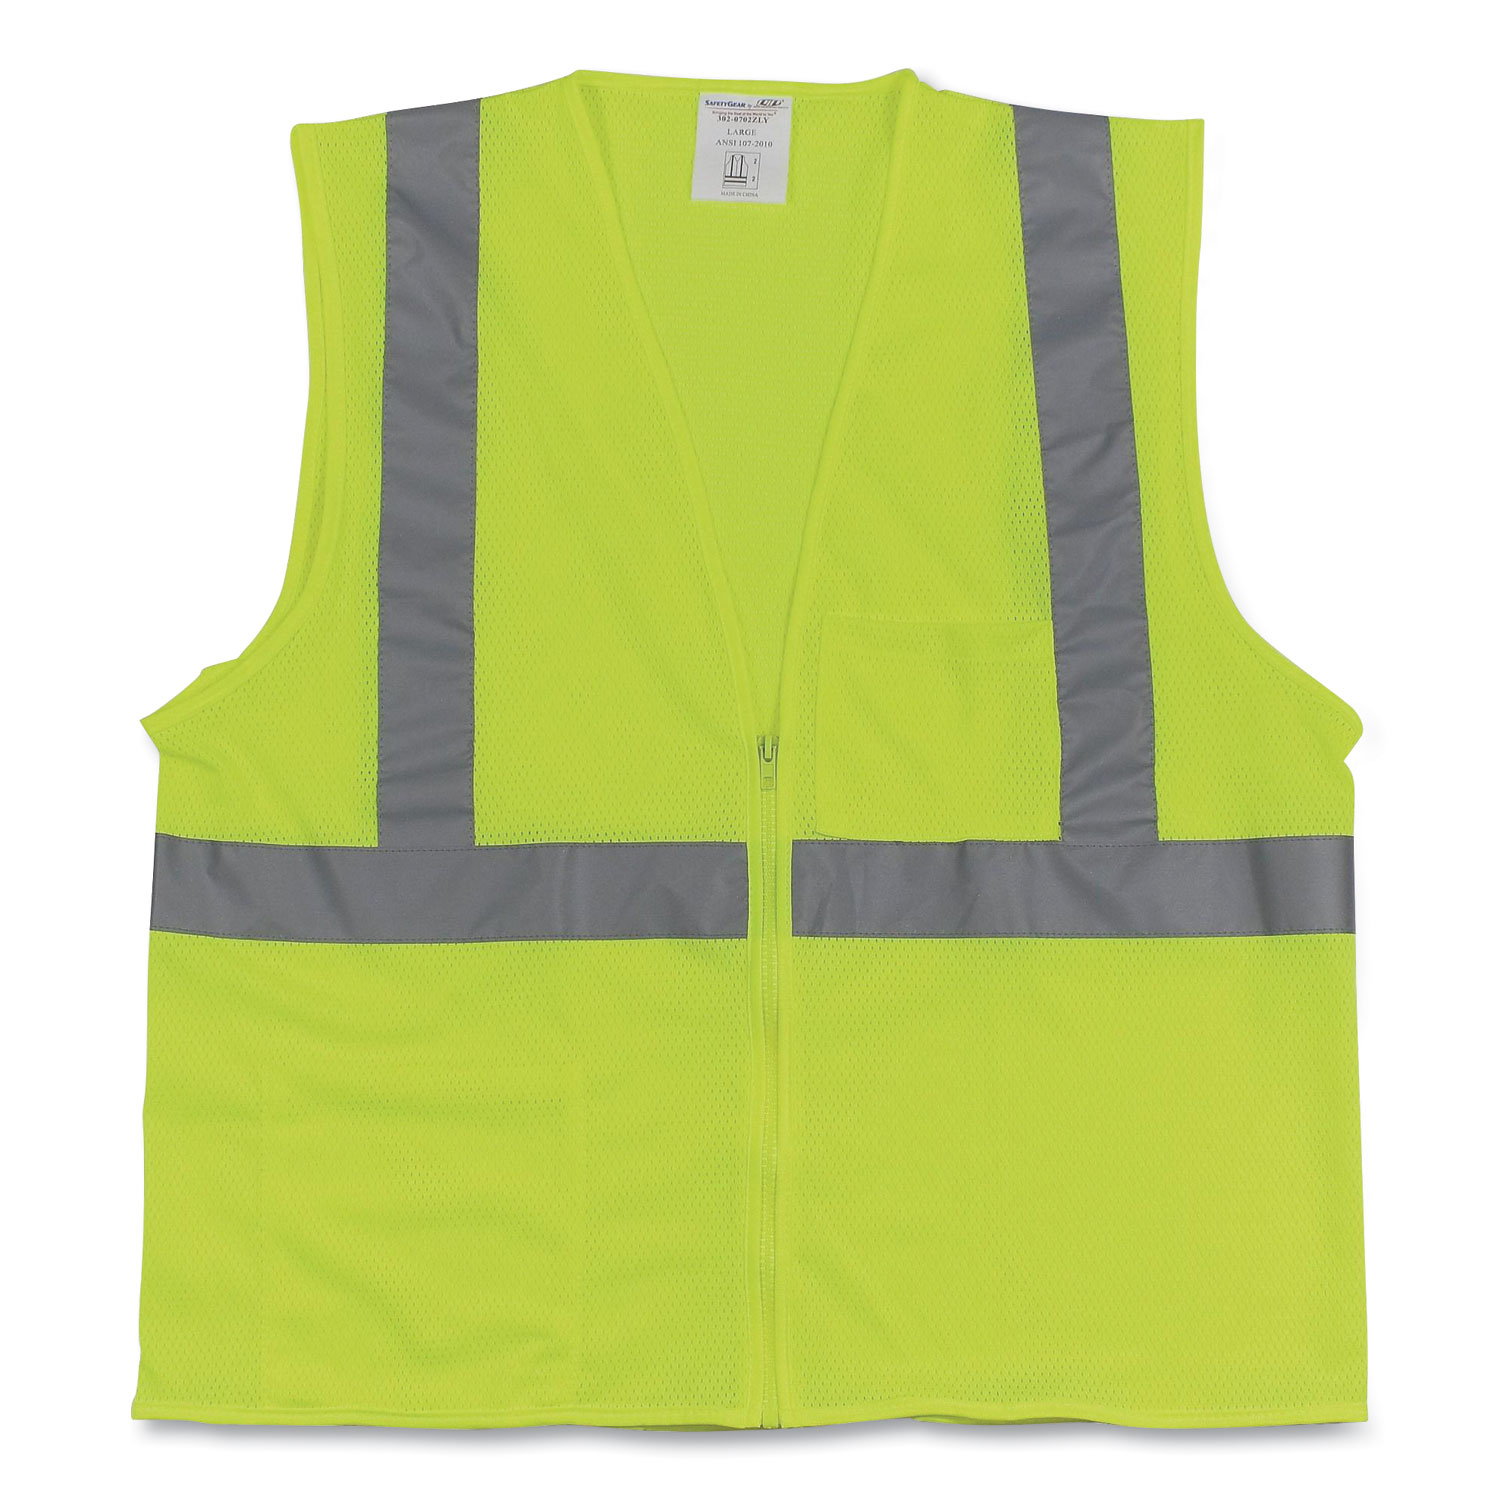 PIP Two-Pocket Zipper Safety Vest, Hi-Viz Lime Yellow, Large